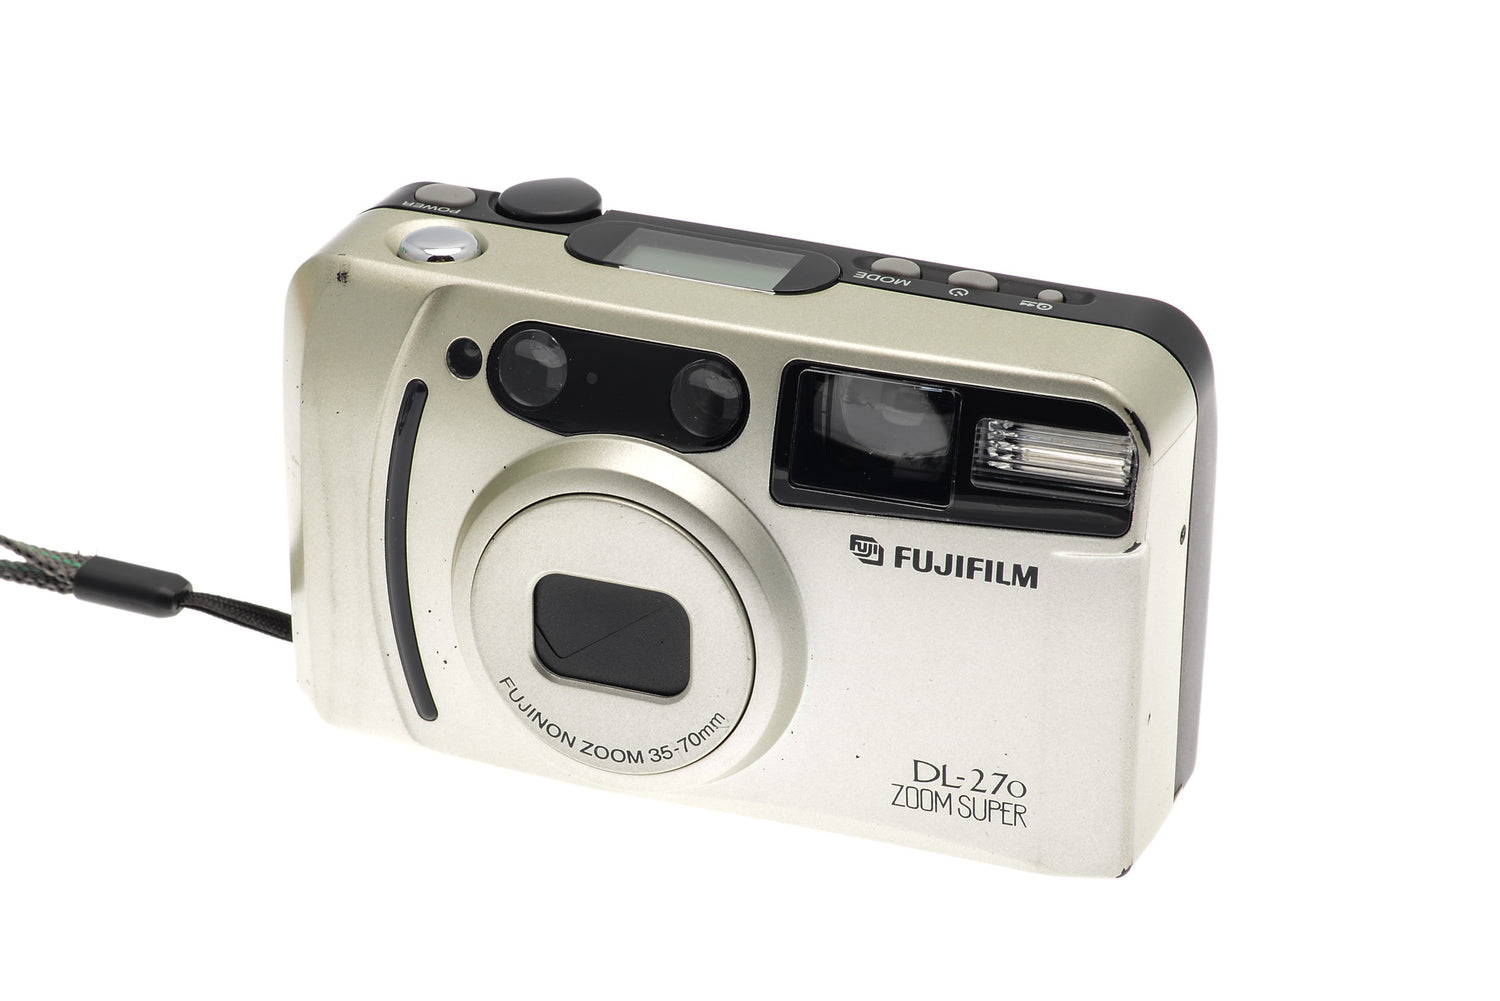 Fujifilm DL-270 Zoom - Camera